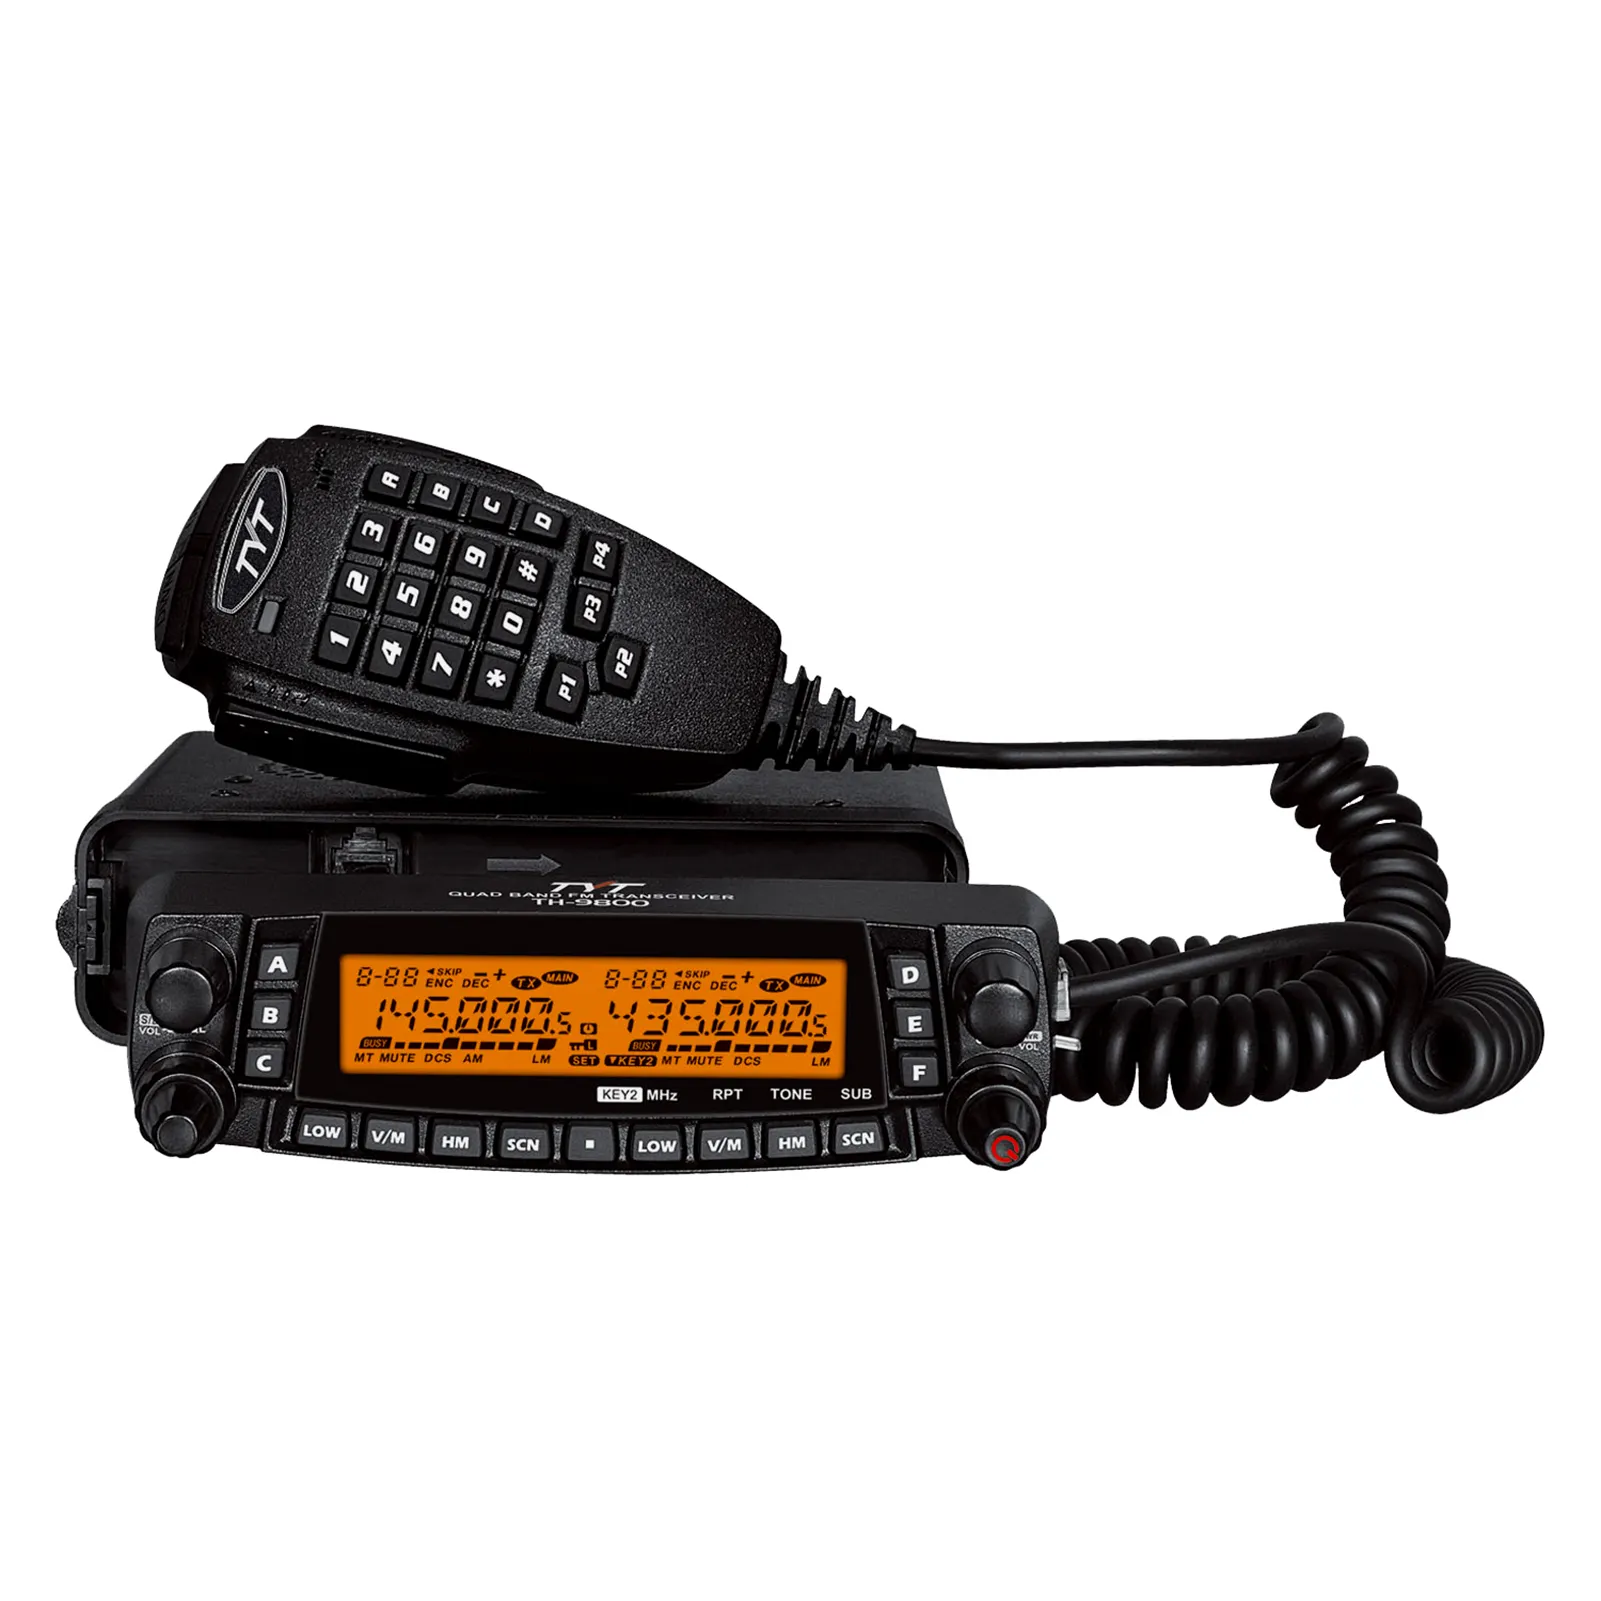 TYT TH-9800, daya Output 50W Quad Band 29/144/430 mHz Radio mobil Transceiver walkie talkie